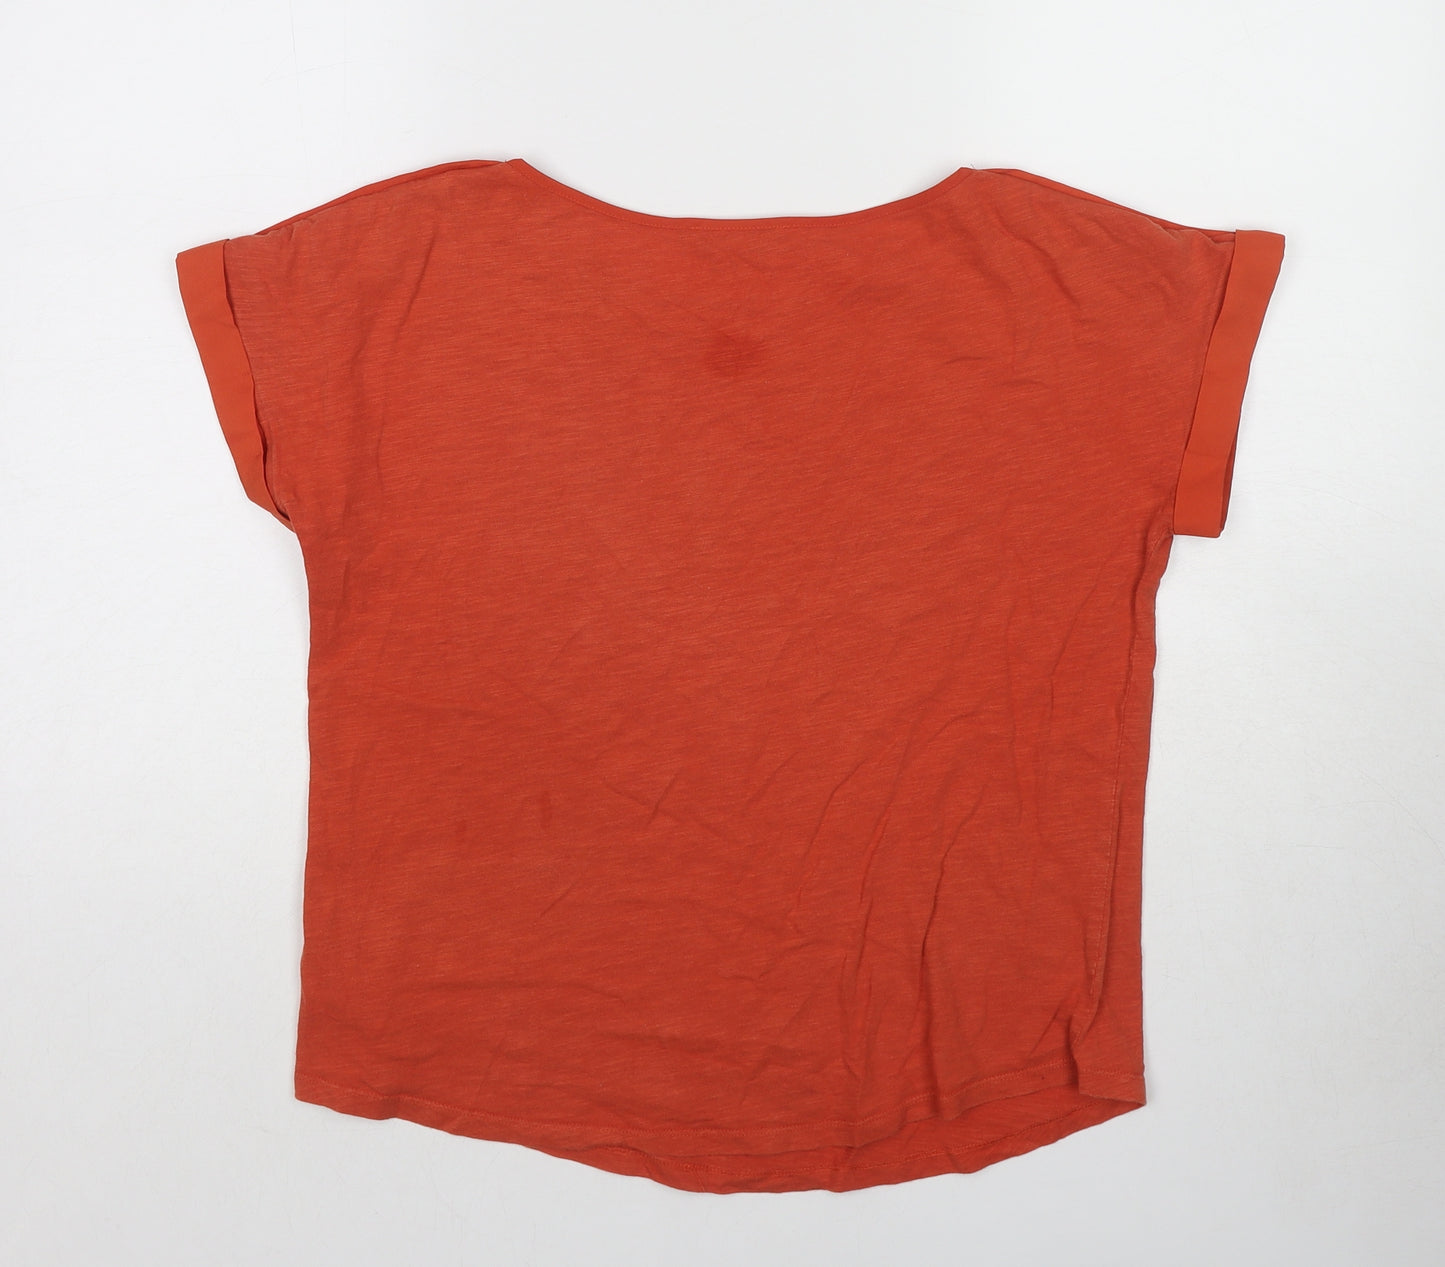 Oasis Womens Orange Cotton Basic T-Shirt Size S Round Neck